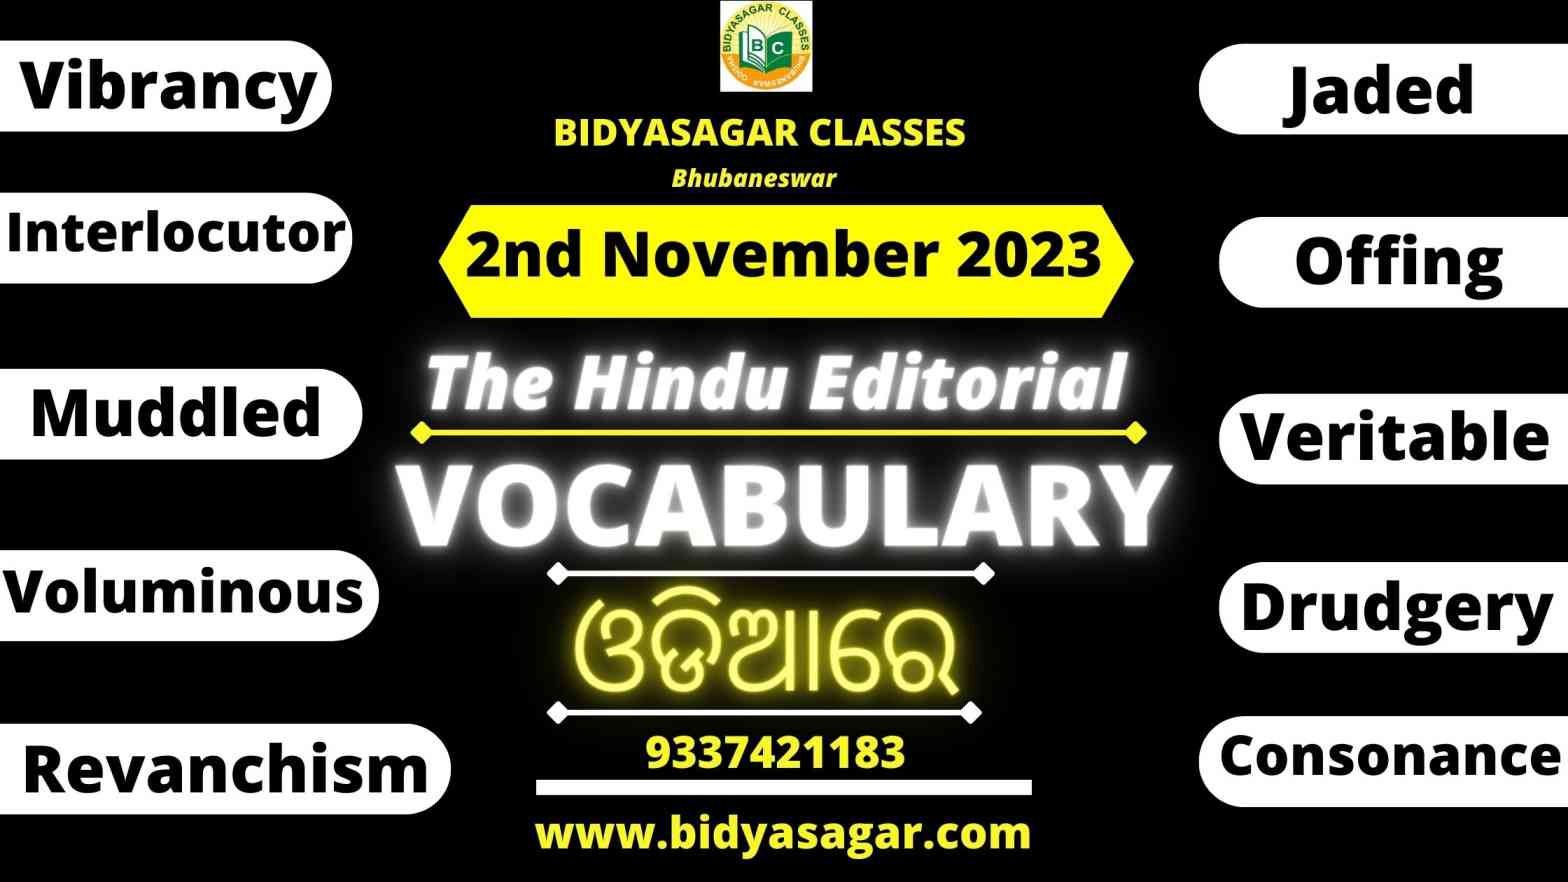 The Hindu Editorial Vocabulary of 2nd November 2023